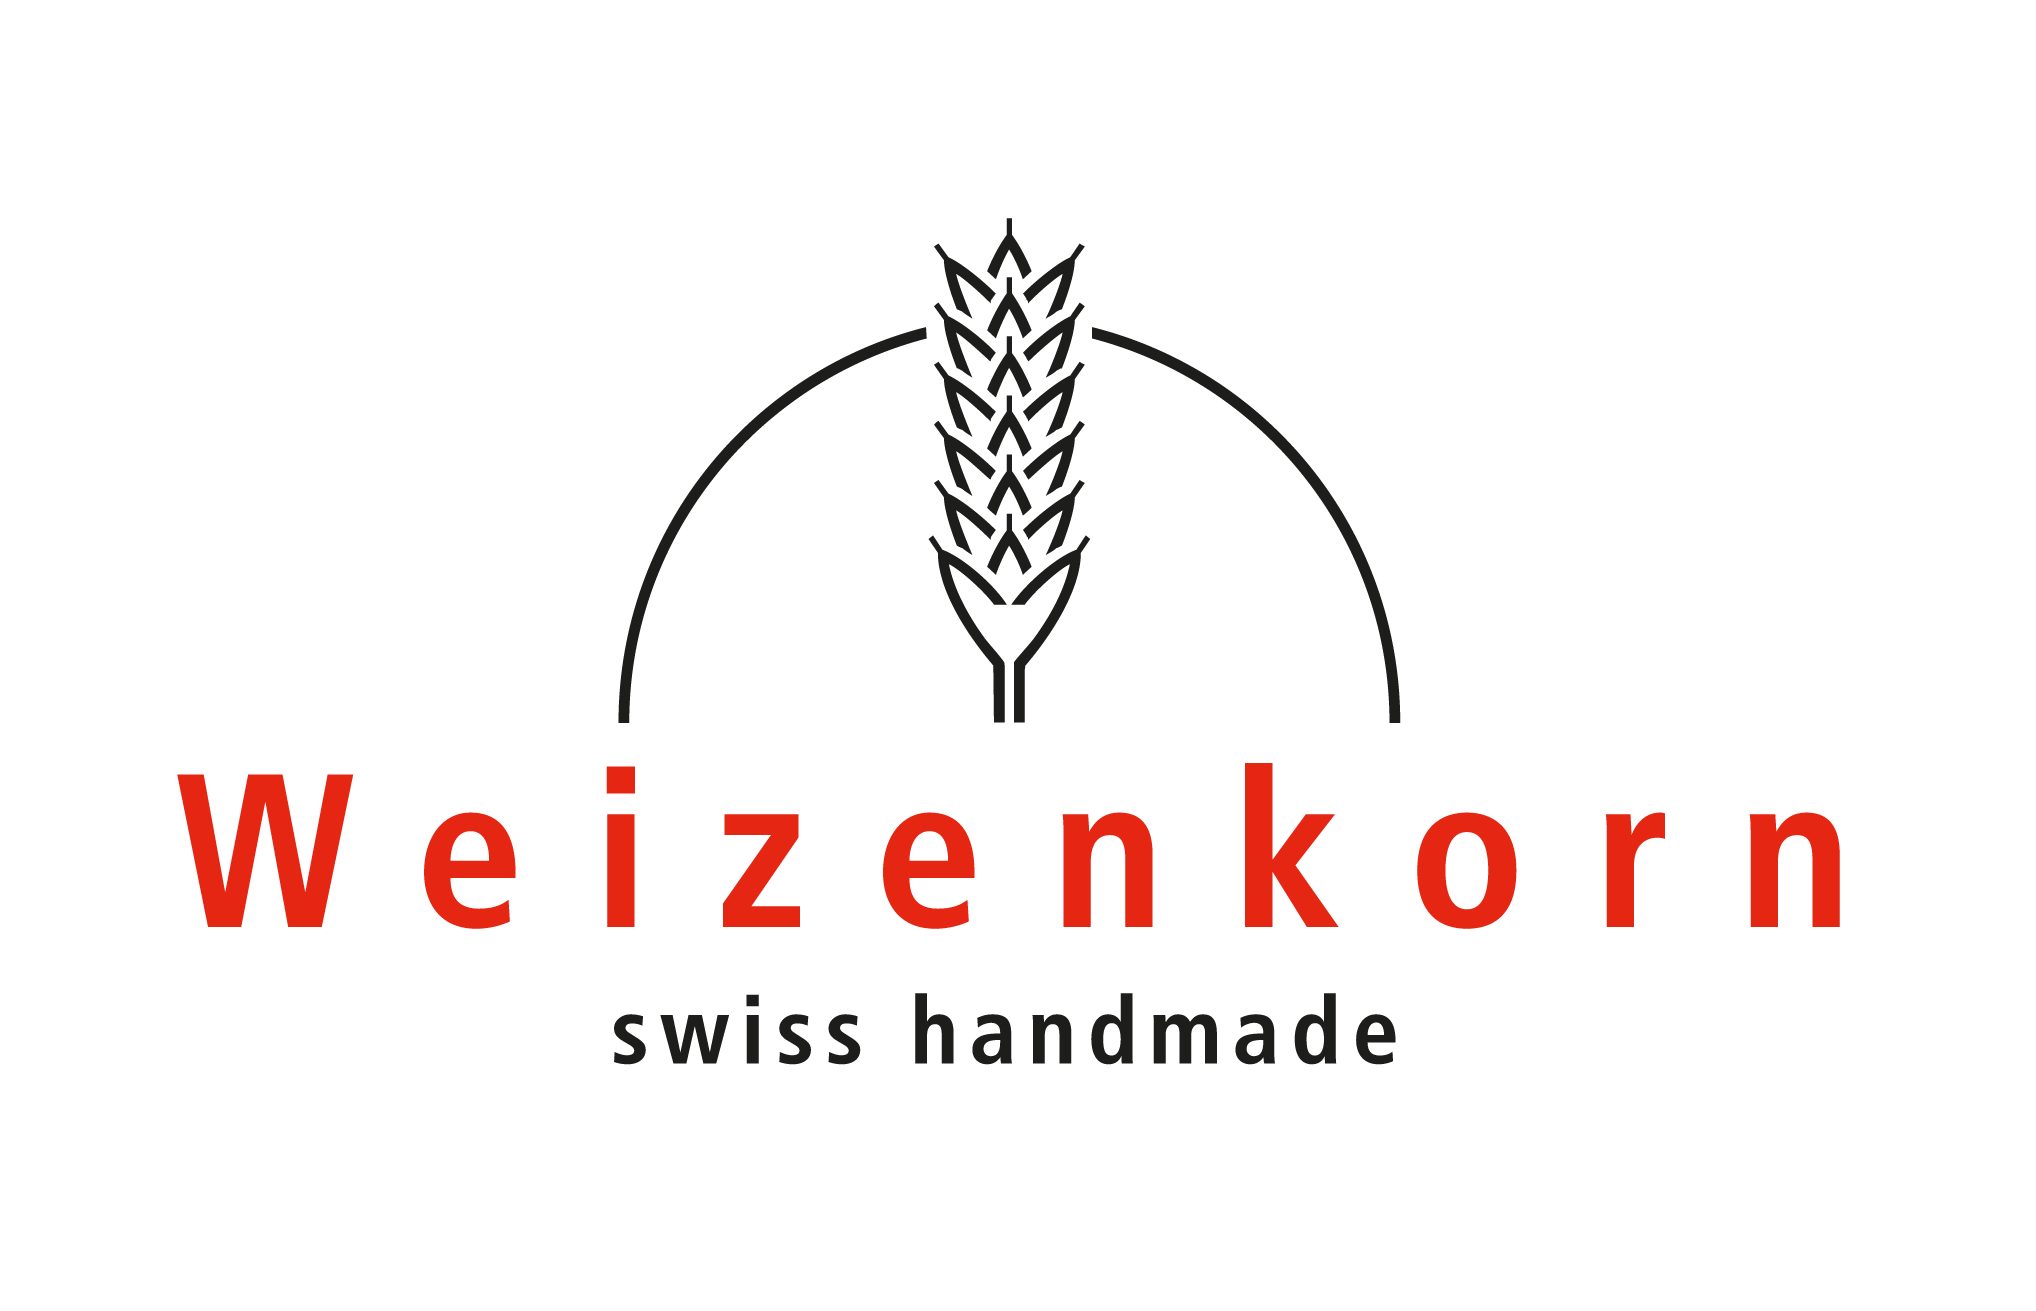 Weizenkorn swiss handmade logo.